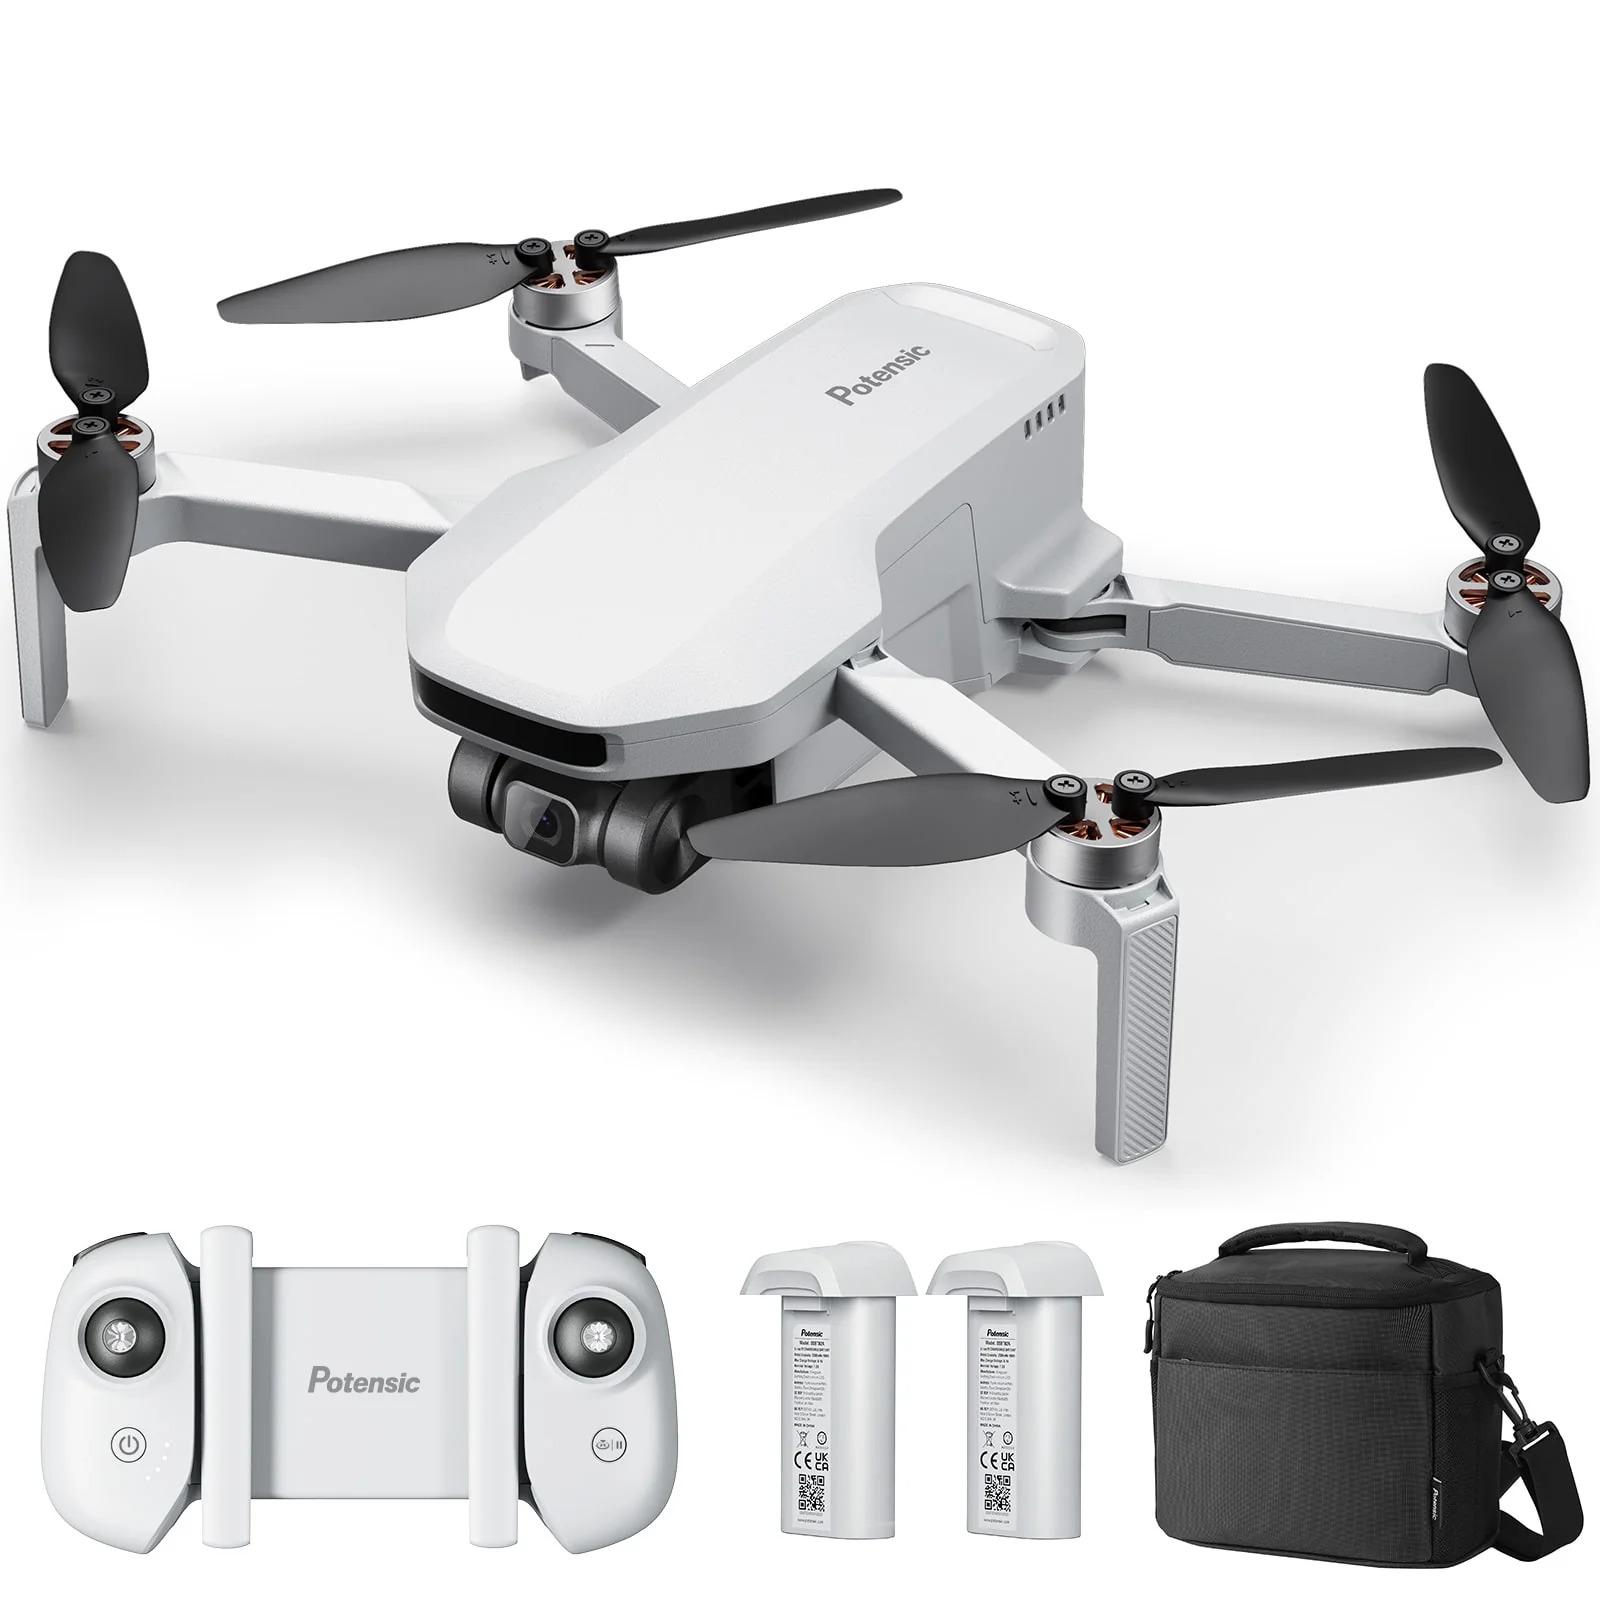 ATOM SE Foldable GPS Drone with 4K HD EIS Camera